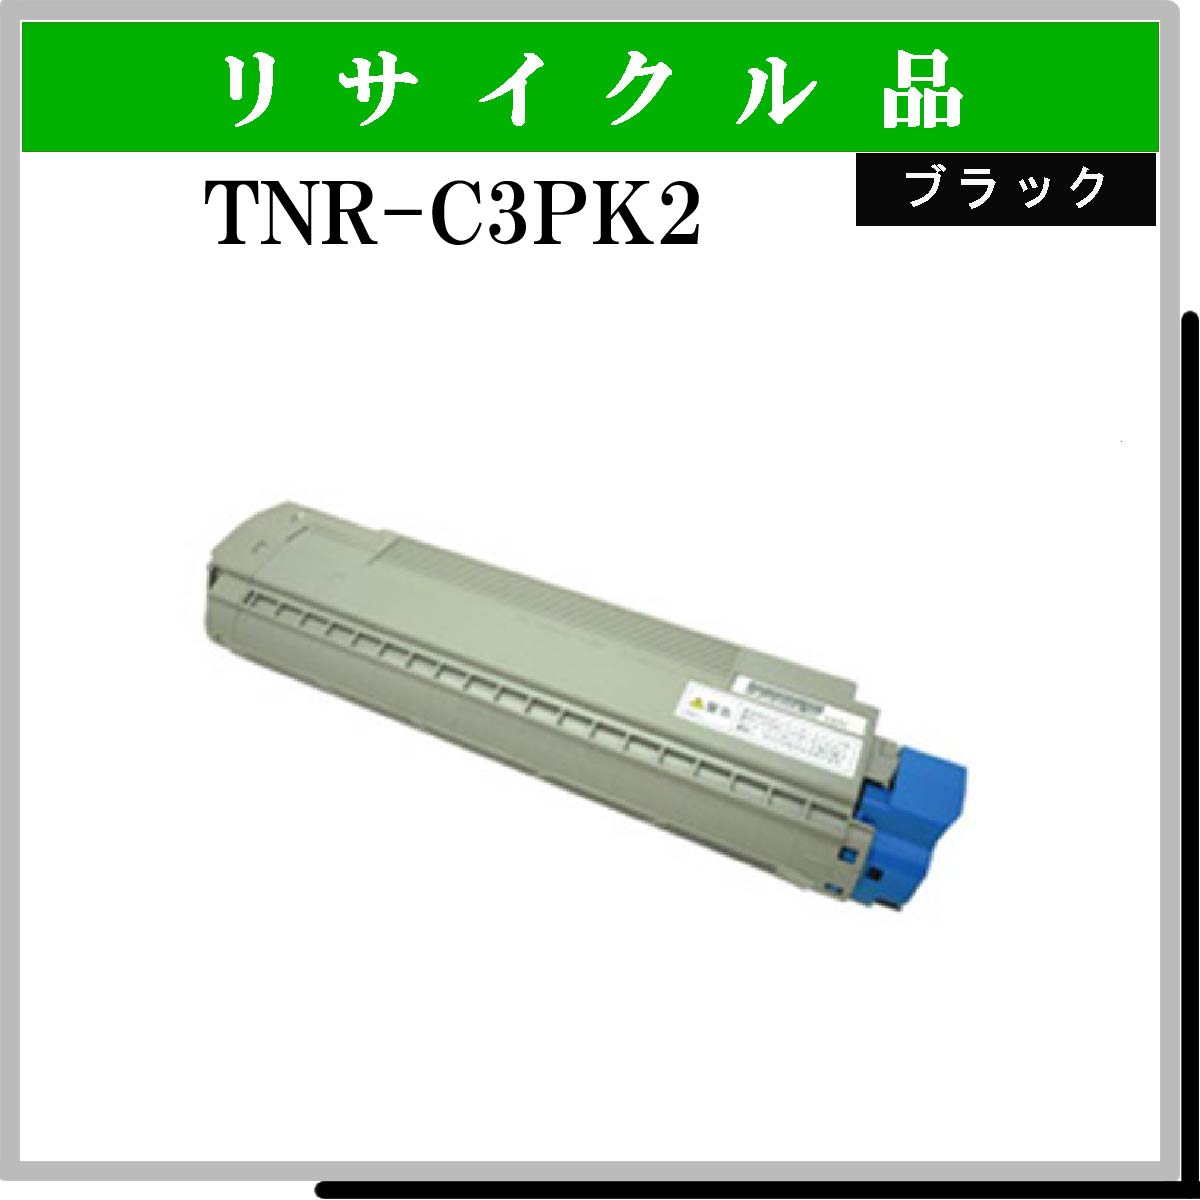 TNR-C3PK2 - ウインドウを閉じる